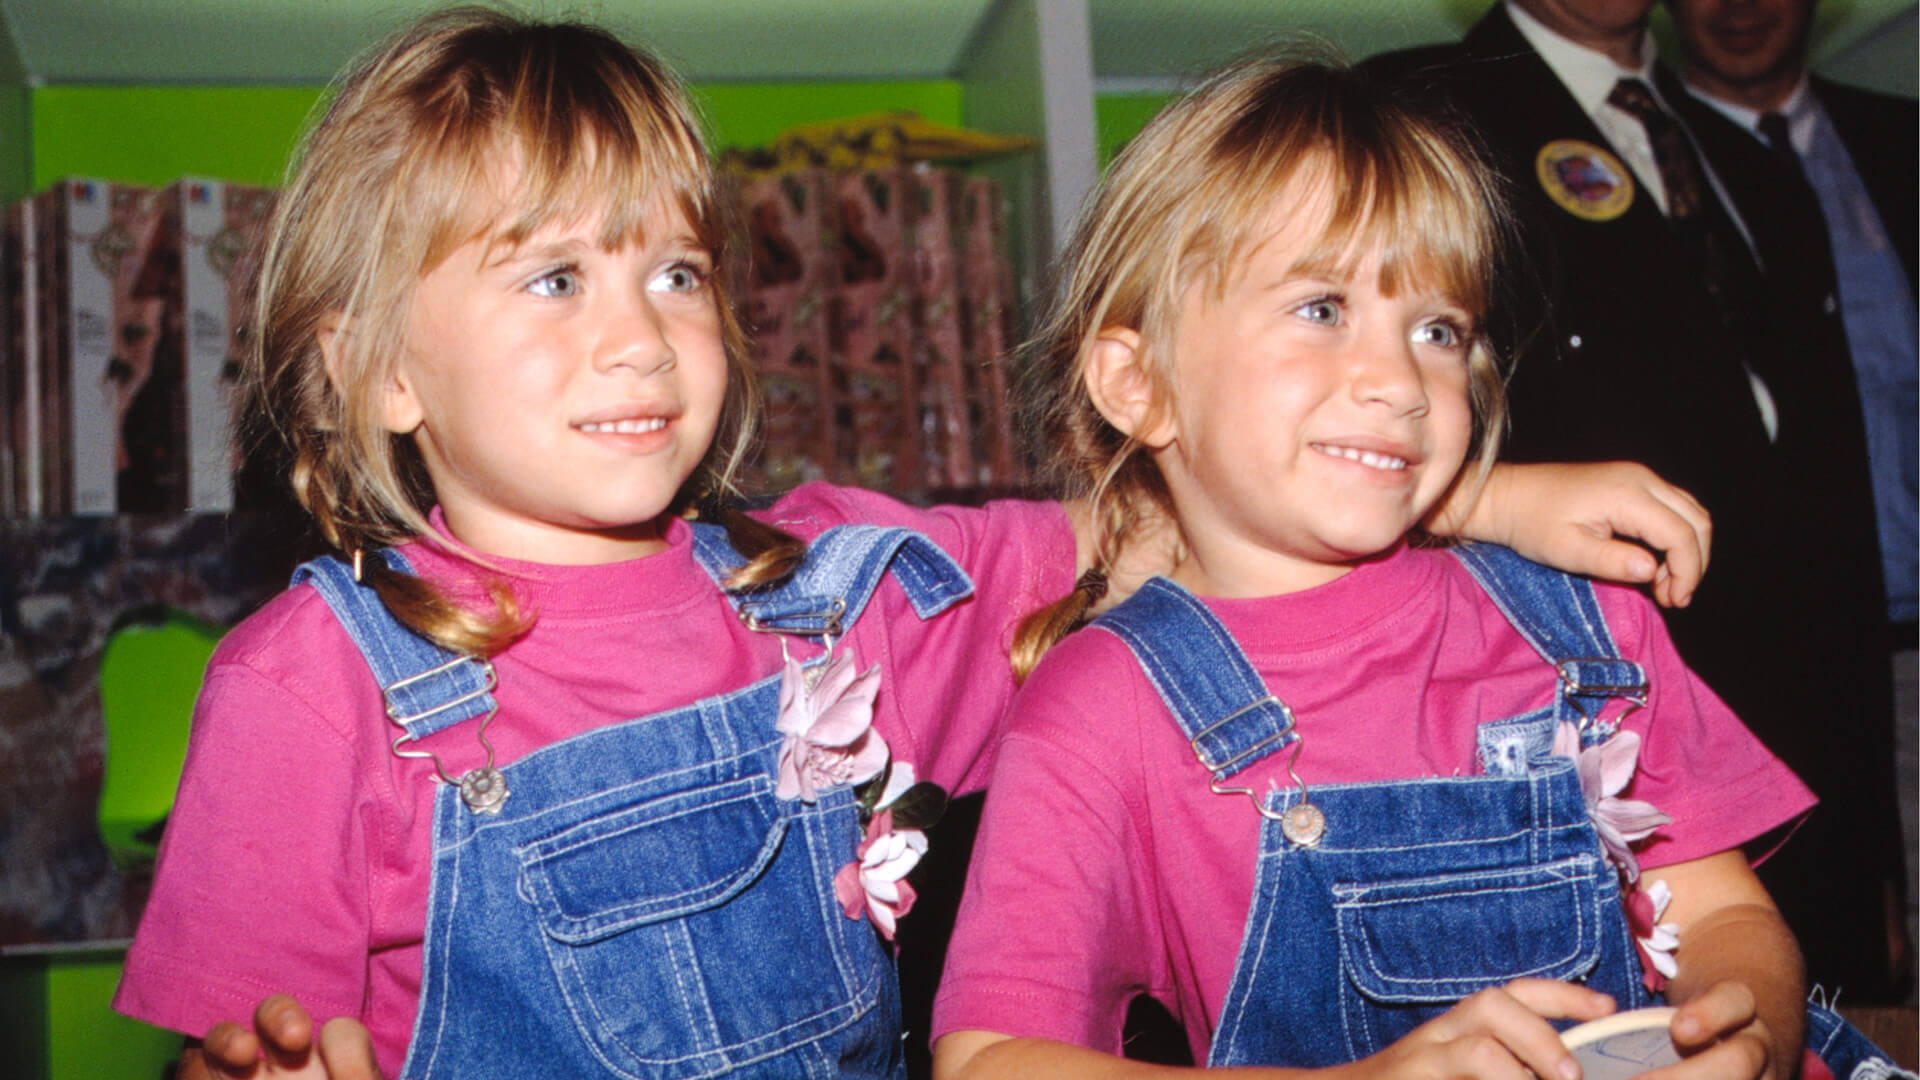 Olsen Twins / The Olsen Twins' Net Worth Passes $400M - GOBanking ...